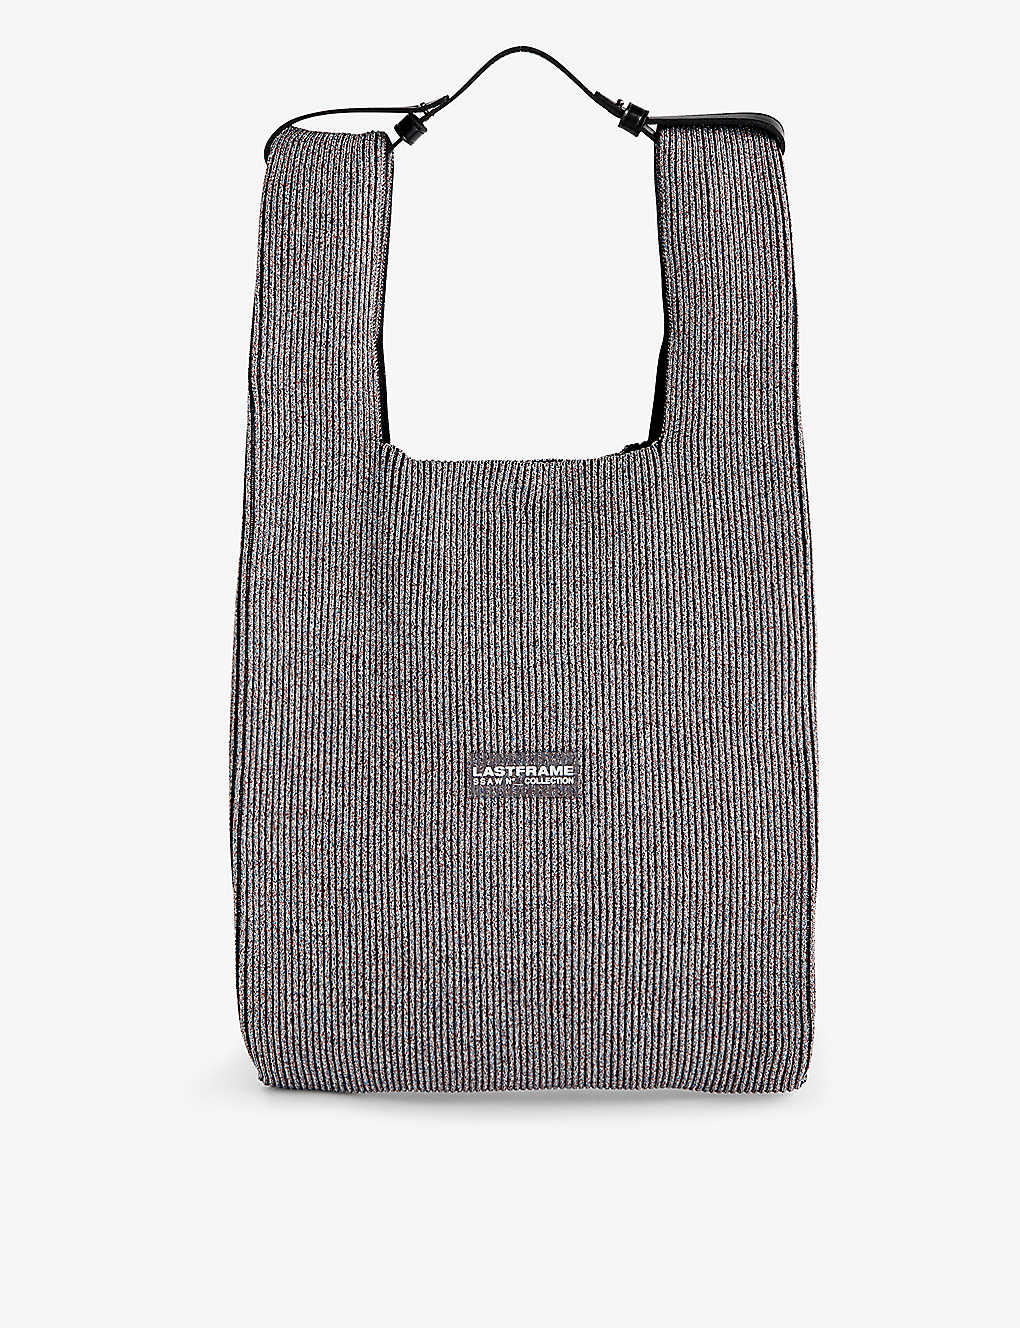 Lastframe Silver Multi Kyoto Metallic Knitted Shoulder Bag